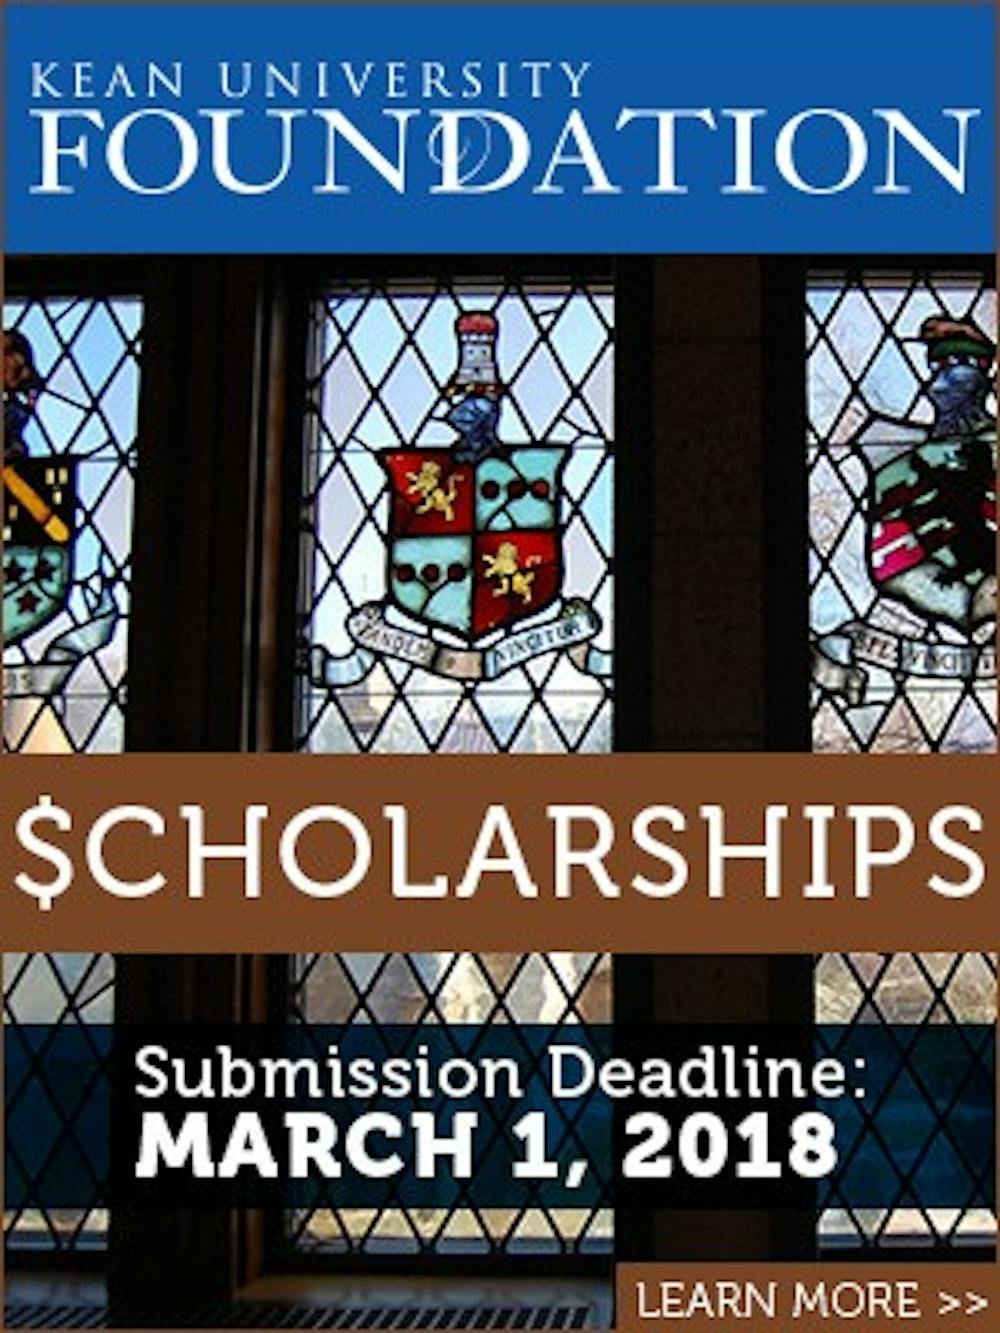 Kean University Foundation Scholarship is Available!